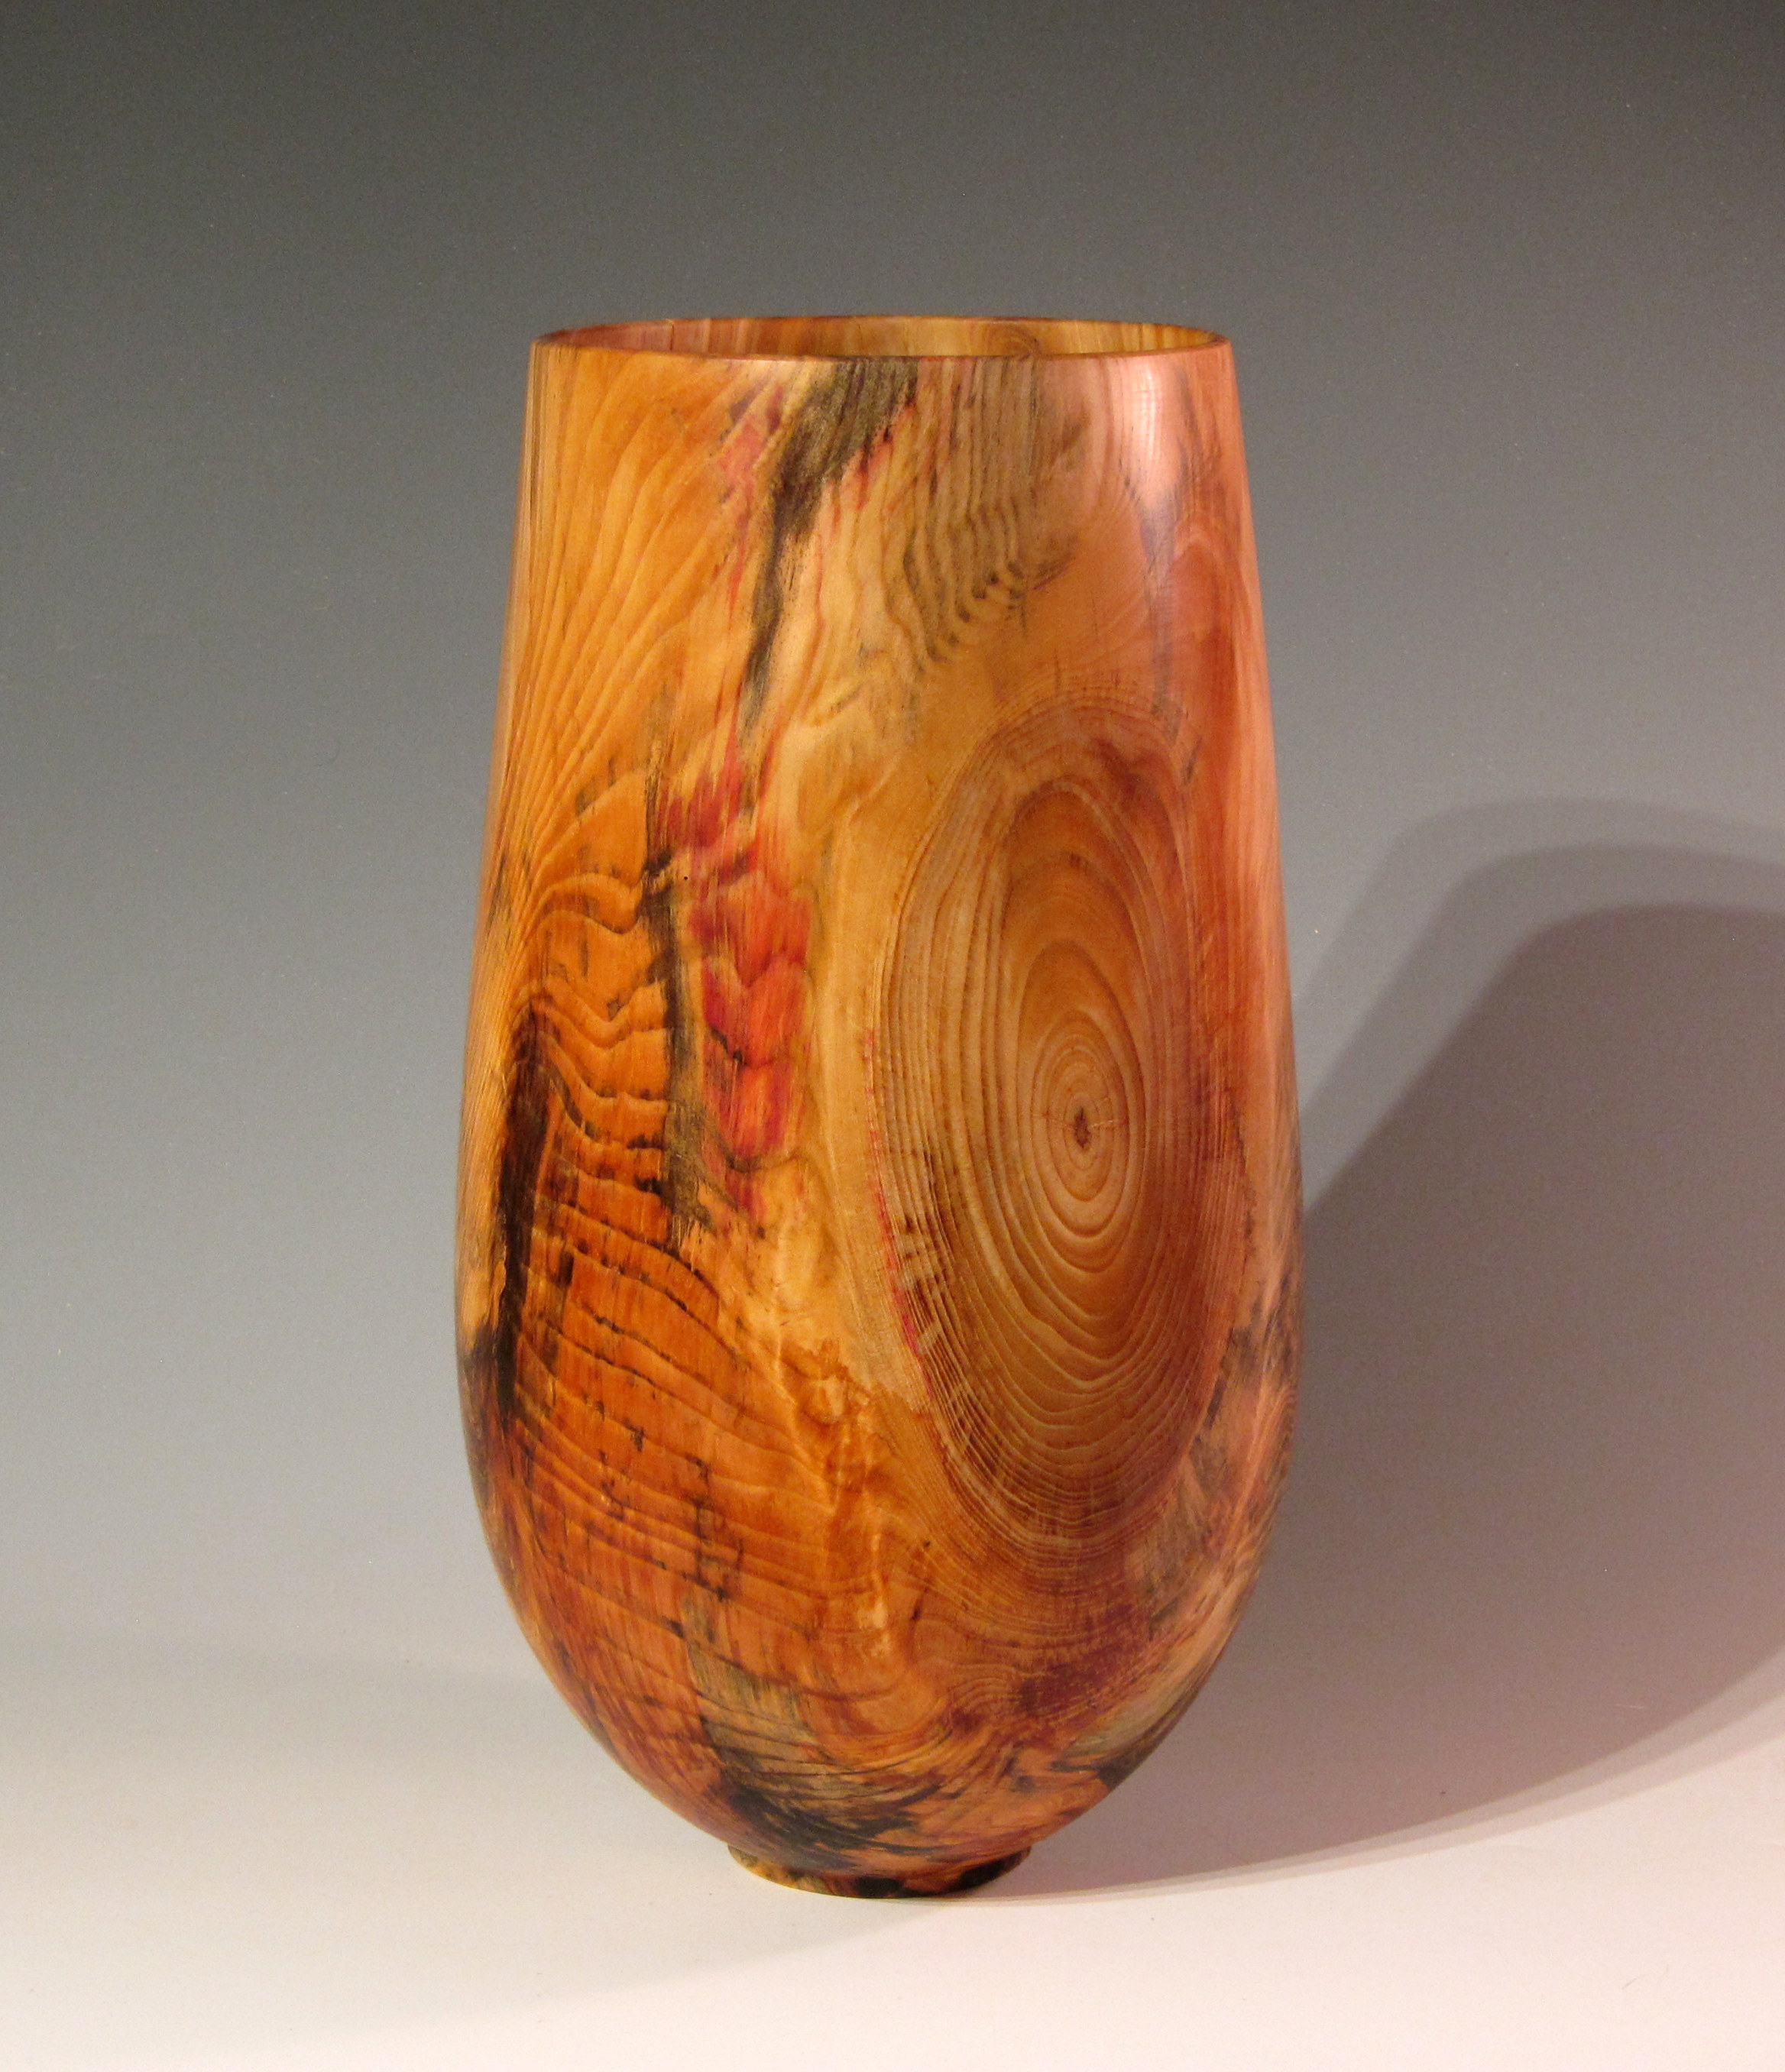 Chris Boerner - 12" x 18" Pine Bowl, Wood from Duke Forest